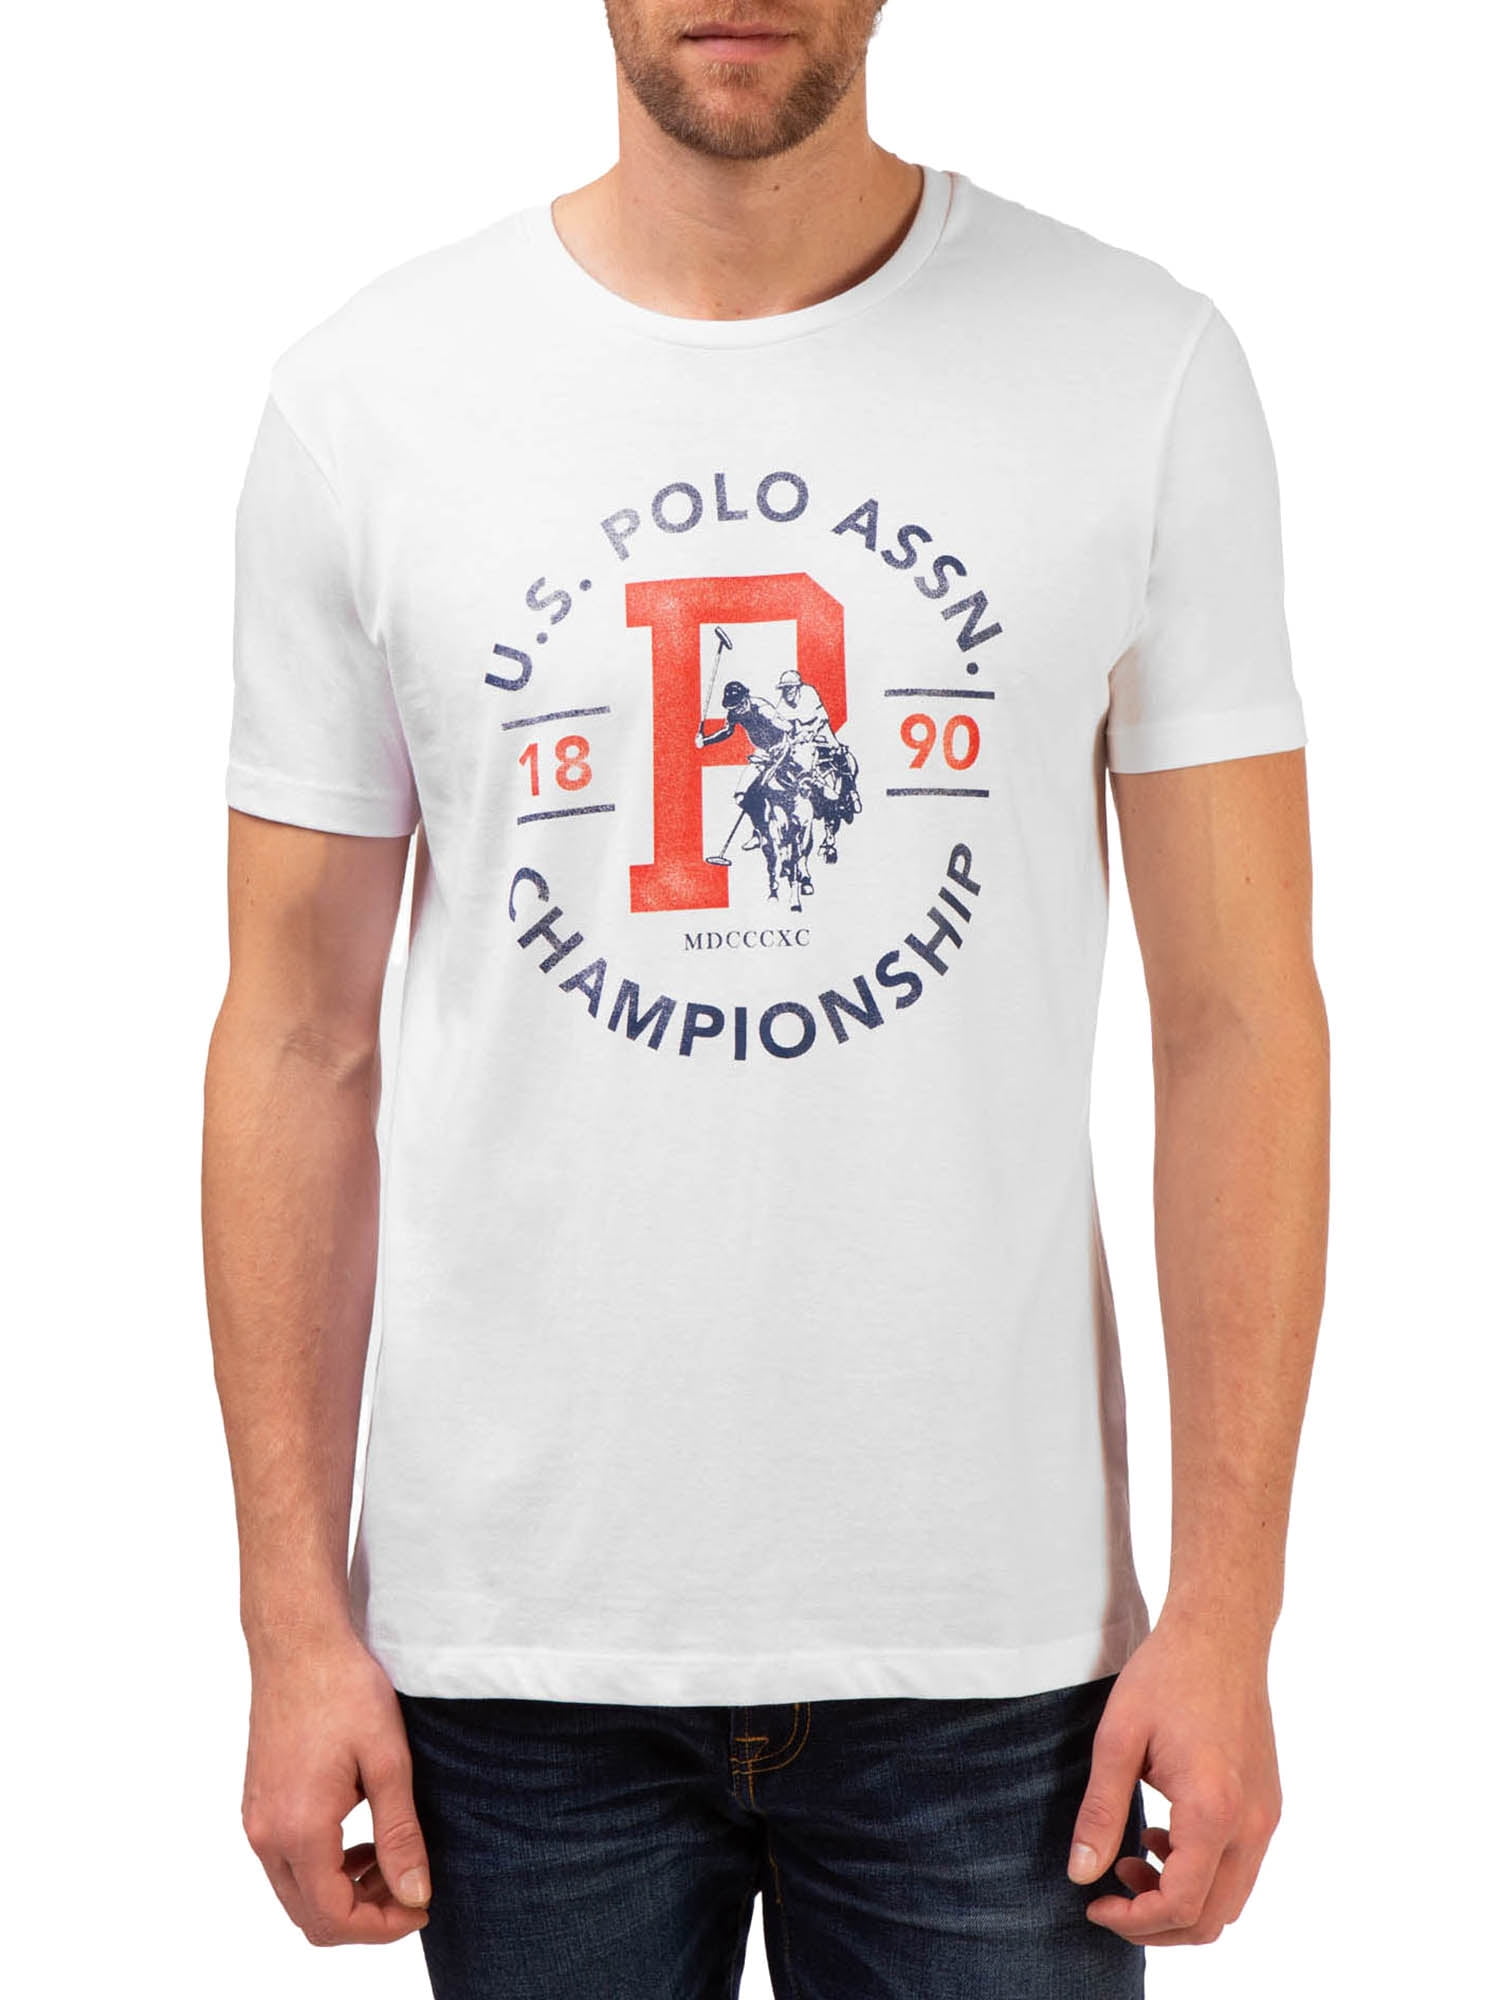 Buy U.S. Polo Assn. Men's Classic Shirt at Ubuy Ghana